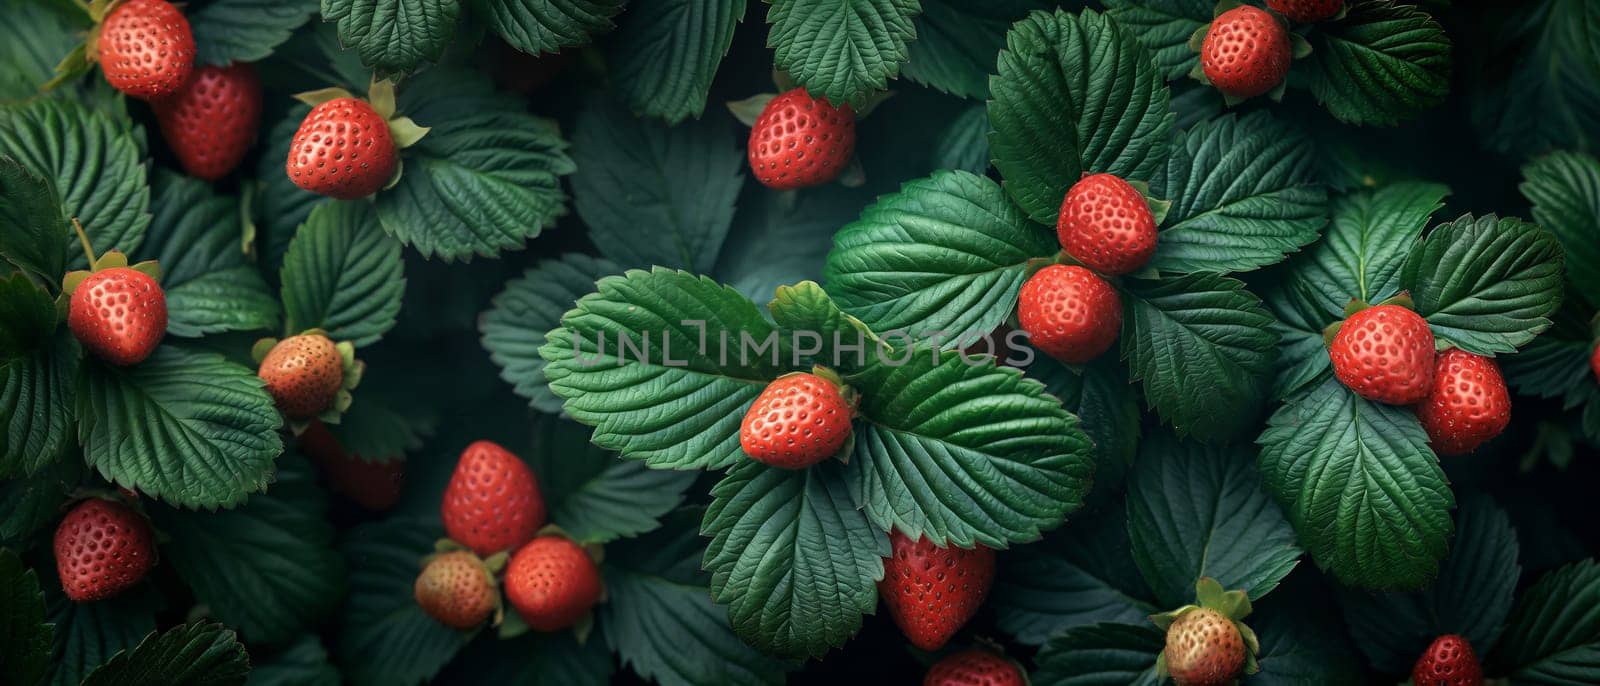 Ripe Strawberries Growing on Bush. by Fischeron